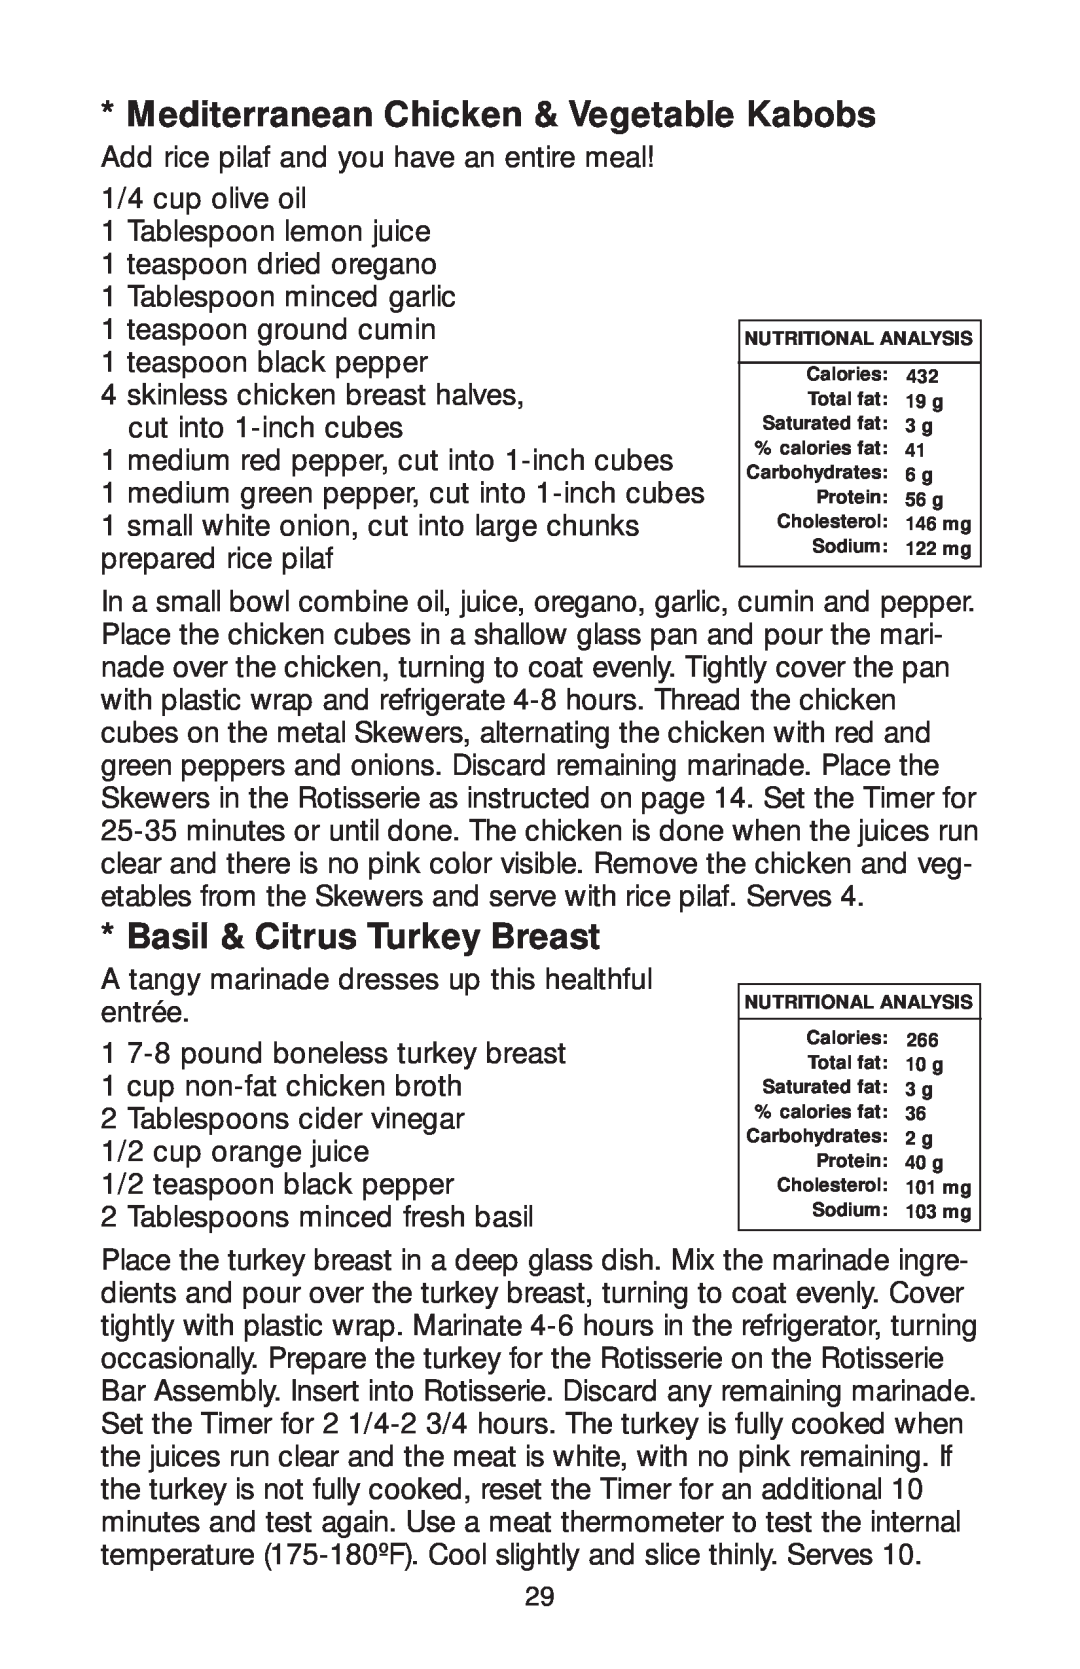 George Foreman GR82 owner manual Mediterranean Chicken & Vegetable Kabobs, Basil & Citrus Turkey Breast 